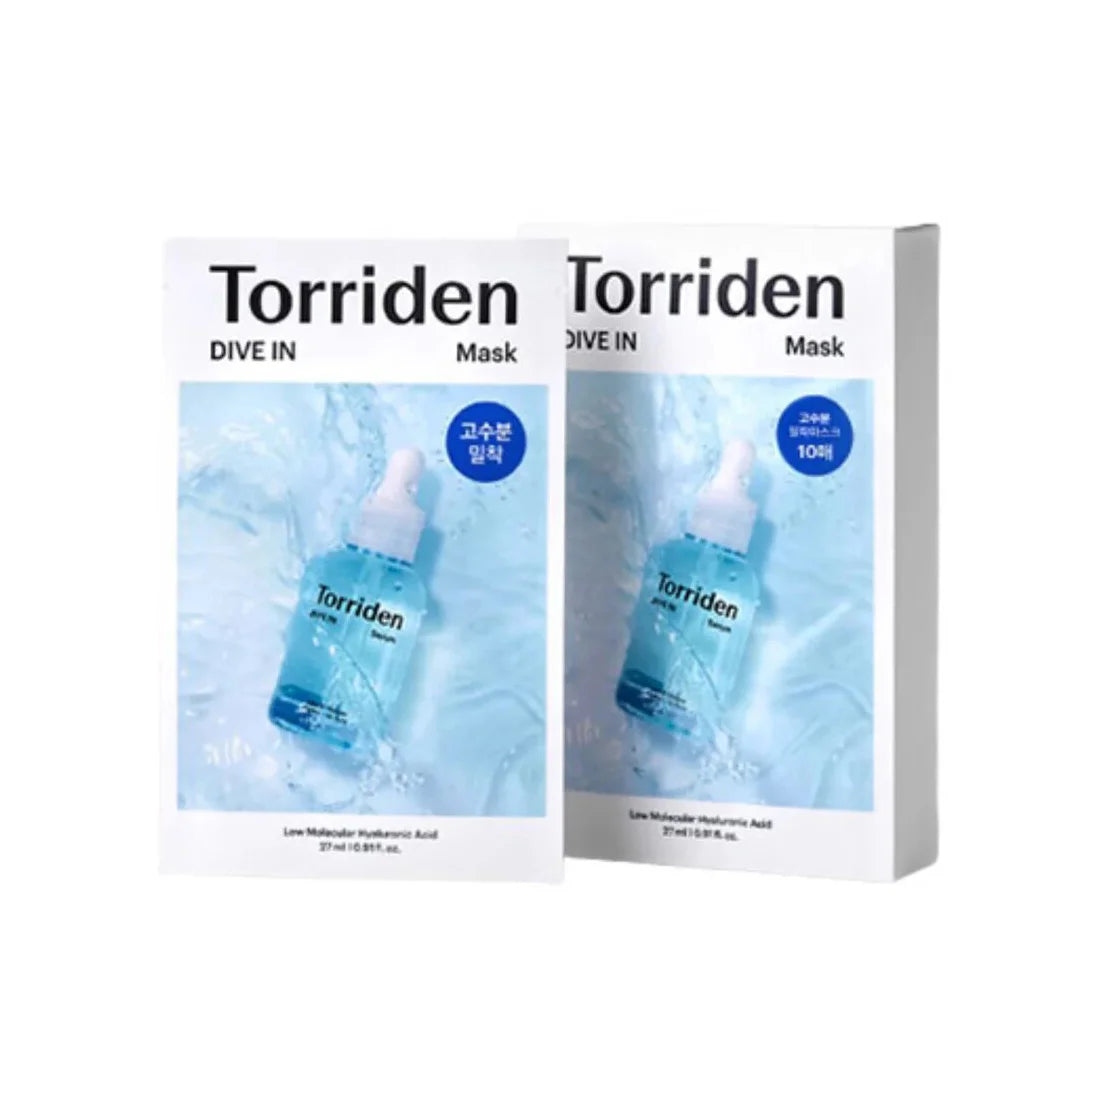 Torriden DIVE-IN Low Molecular Hyaluronic Acid Mask Pack (Set of 10) Best-selling Korean skincare for dry irritated skin redness wrinkles fine lines home self-care face mask K Beauty World 